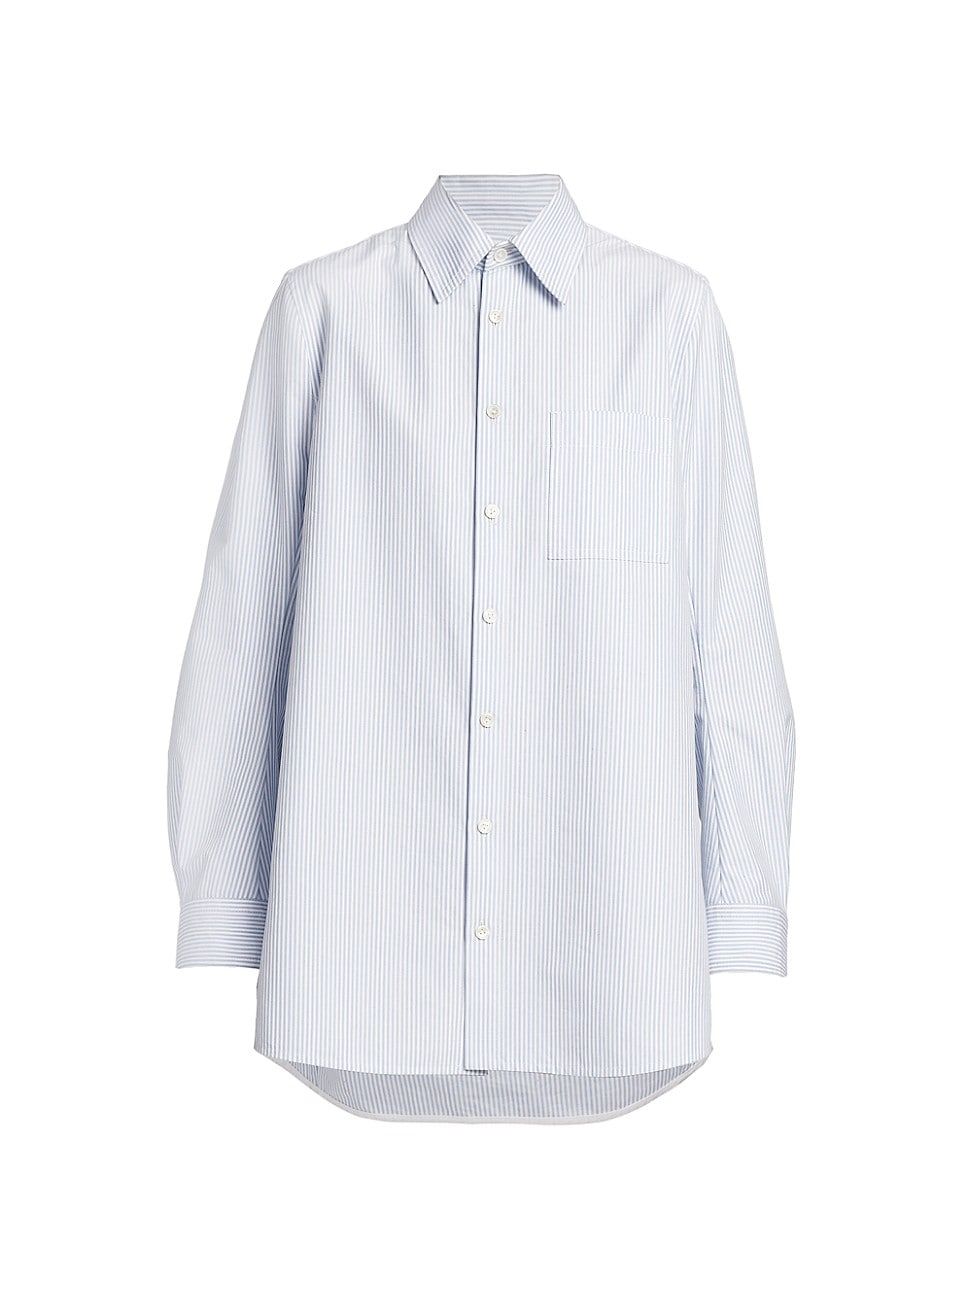 Women's Striped Cotton Shirt - Pale Blue White - Size 2 | Saks Fifth Avenue